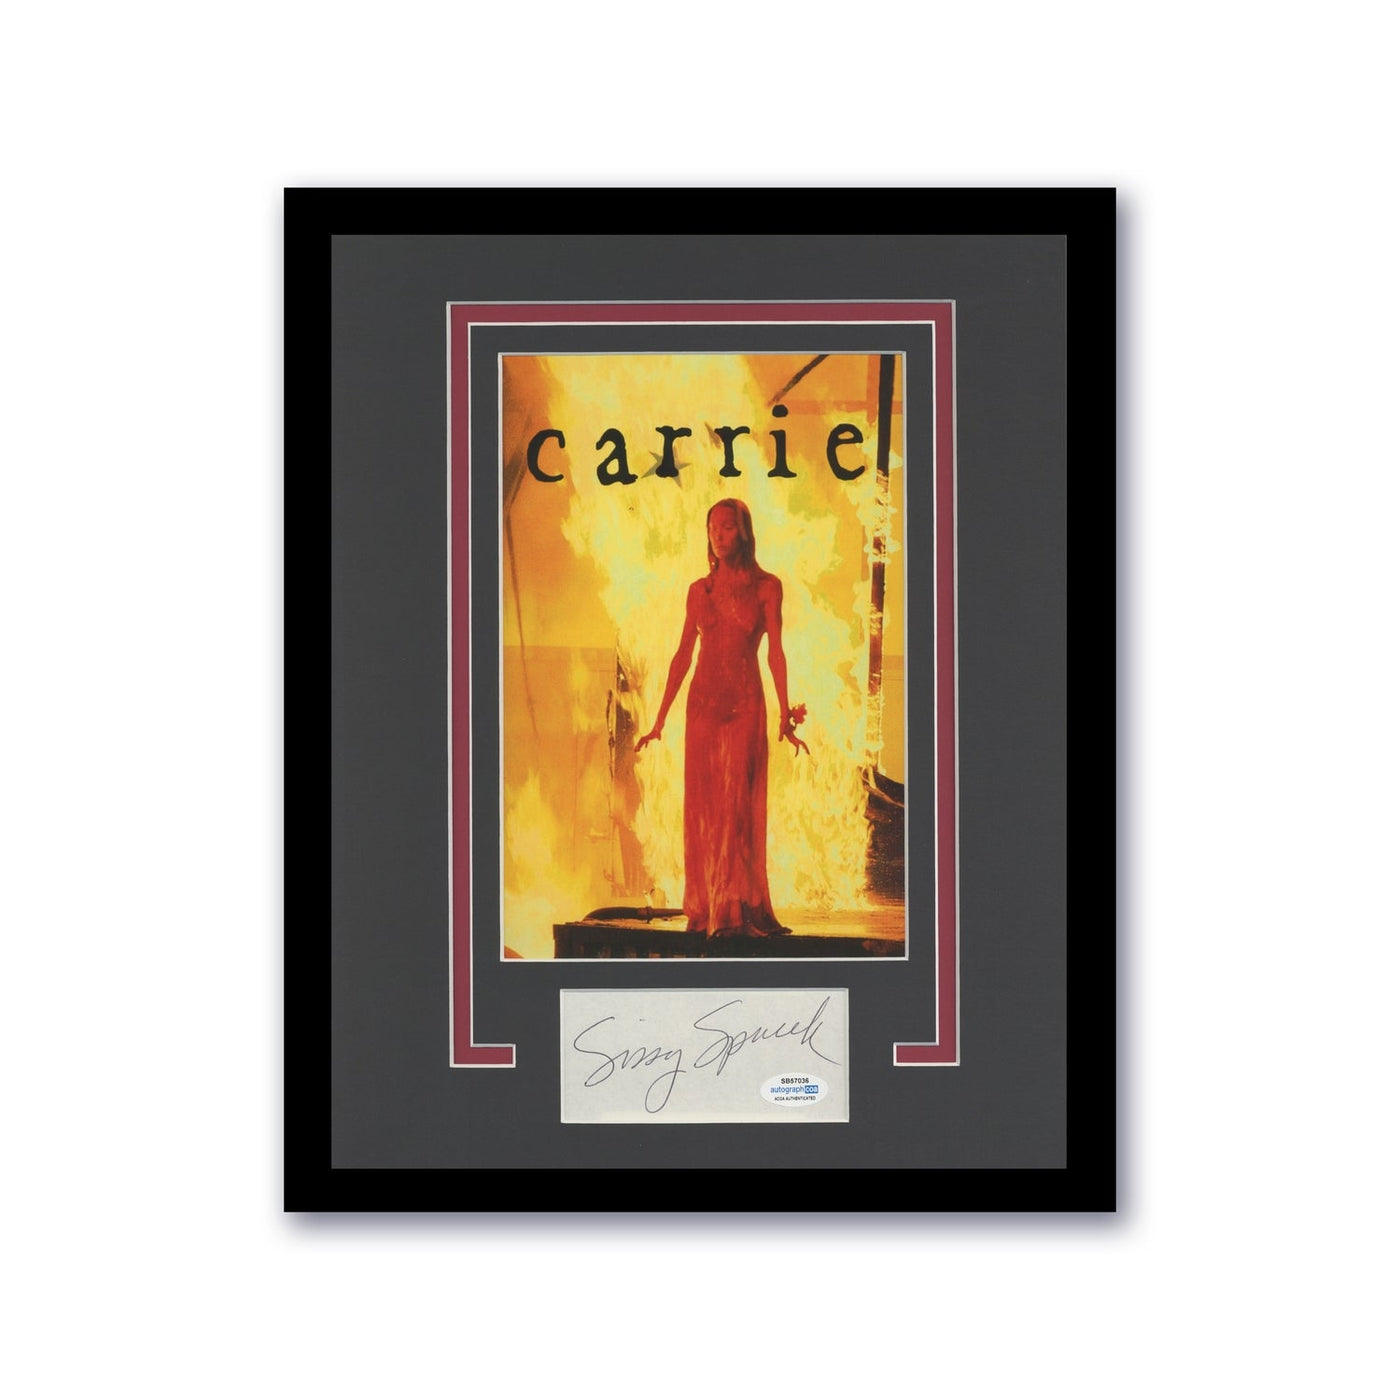 Carrie Sissy Spacek Autograph Signed 11x14 Framed Poster Photo Stephen King ACOA